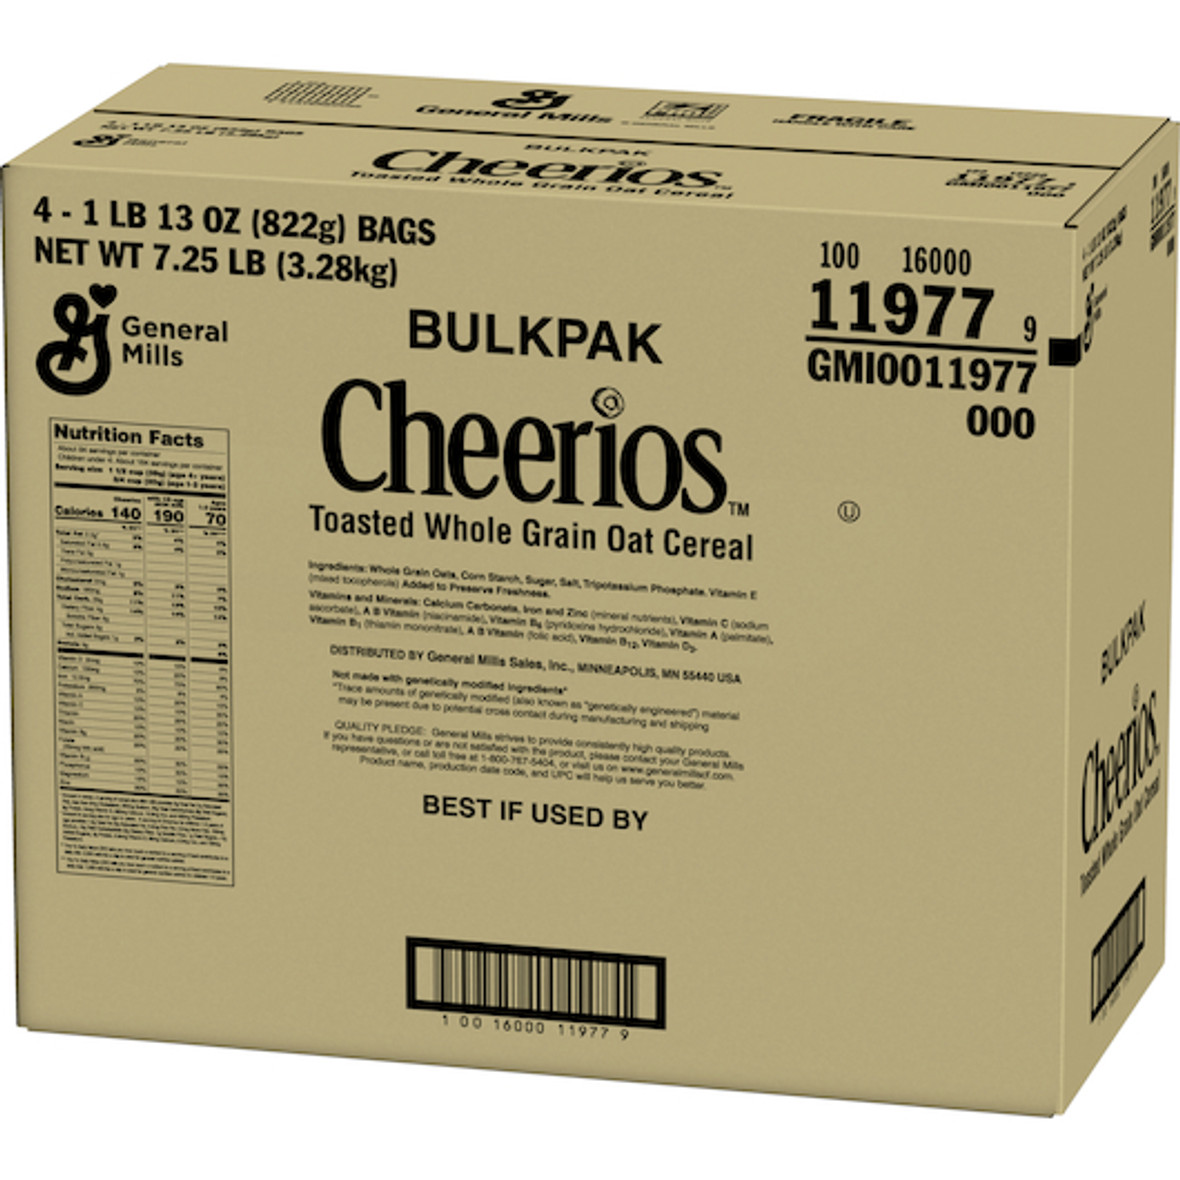 Cheerios Bulk Pak Toasted Whole Grain Oat Cereal, 29 Ounce Bag - 4 Per Case